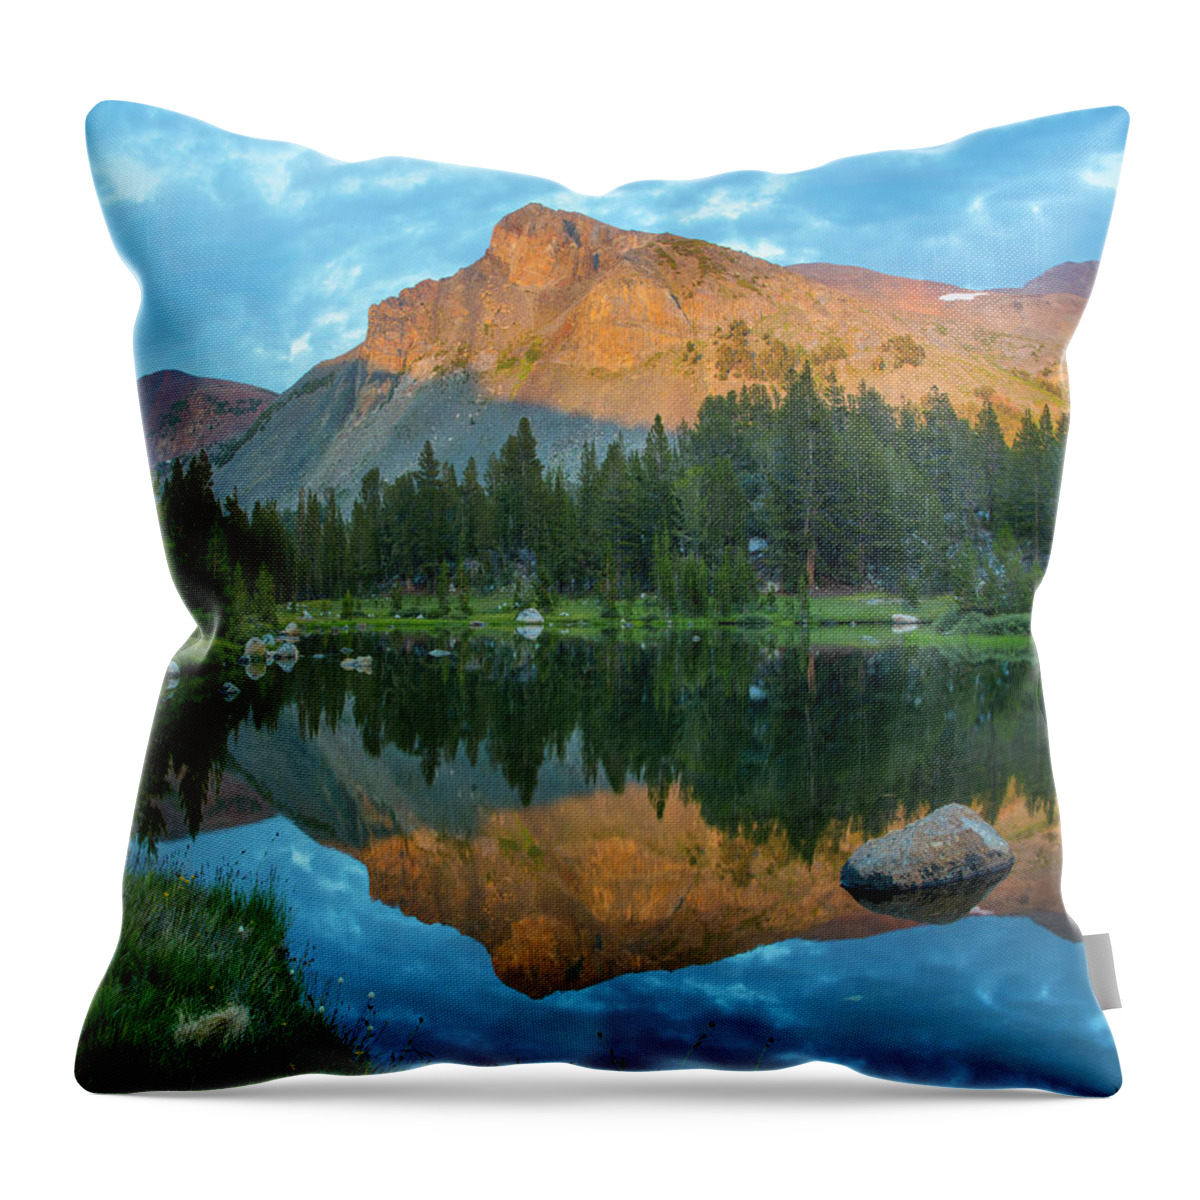 00574861 Throw Pillow featuring the photograph Mt. Dana Reflection, Tioga Pass, Yosemite National Park, California #2 by Tim Fitzharris